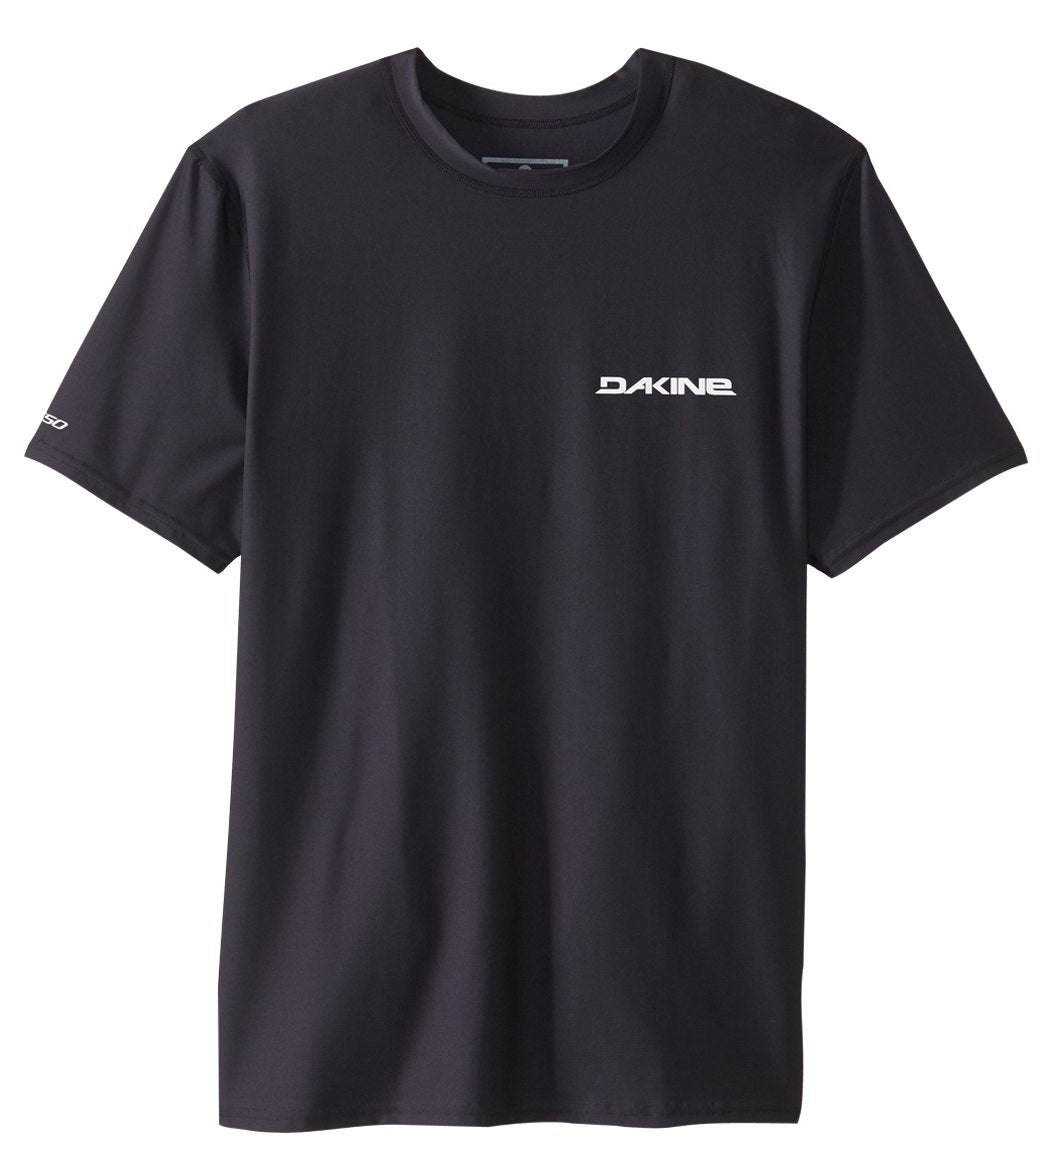 Dakine Men's Heavy Duty Loose Fit Short Sleeve Rashguard Shirt - Black Small Elastane/Polyester - Swimoutlet.com